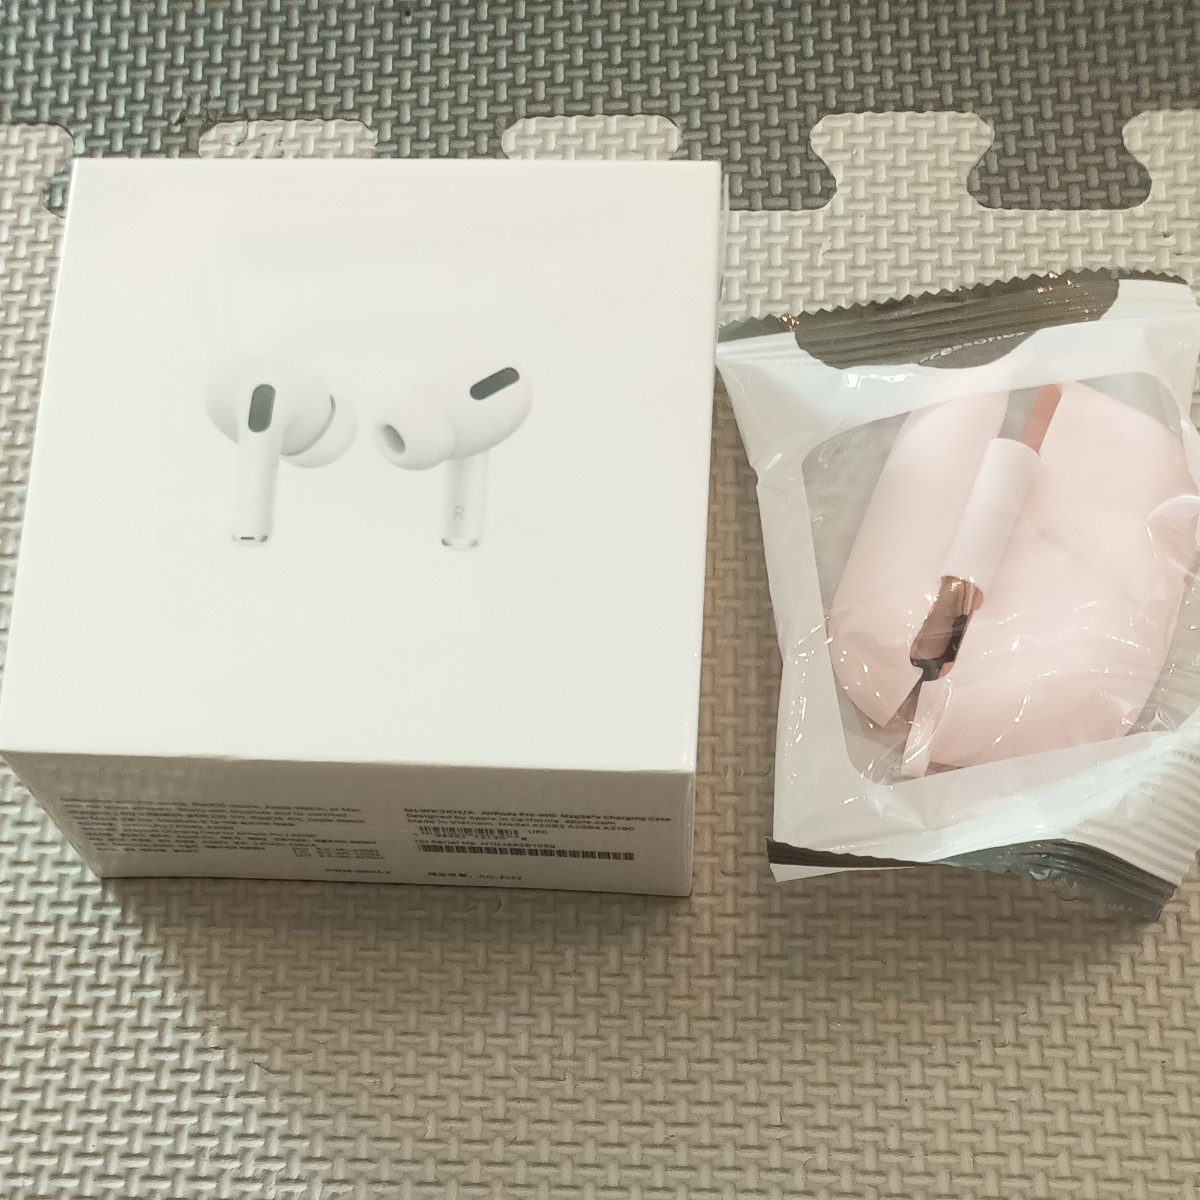 Airpods Pro 第一世代 箱付き 試用期間1年 apple storeで購入